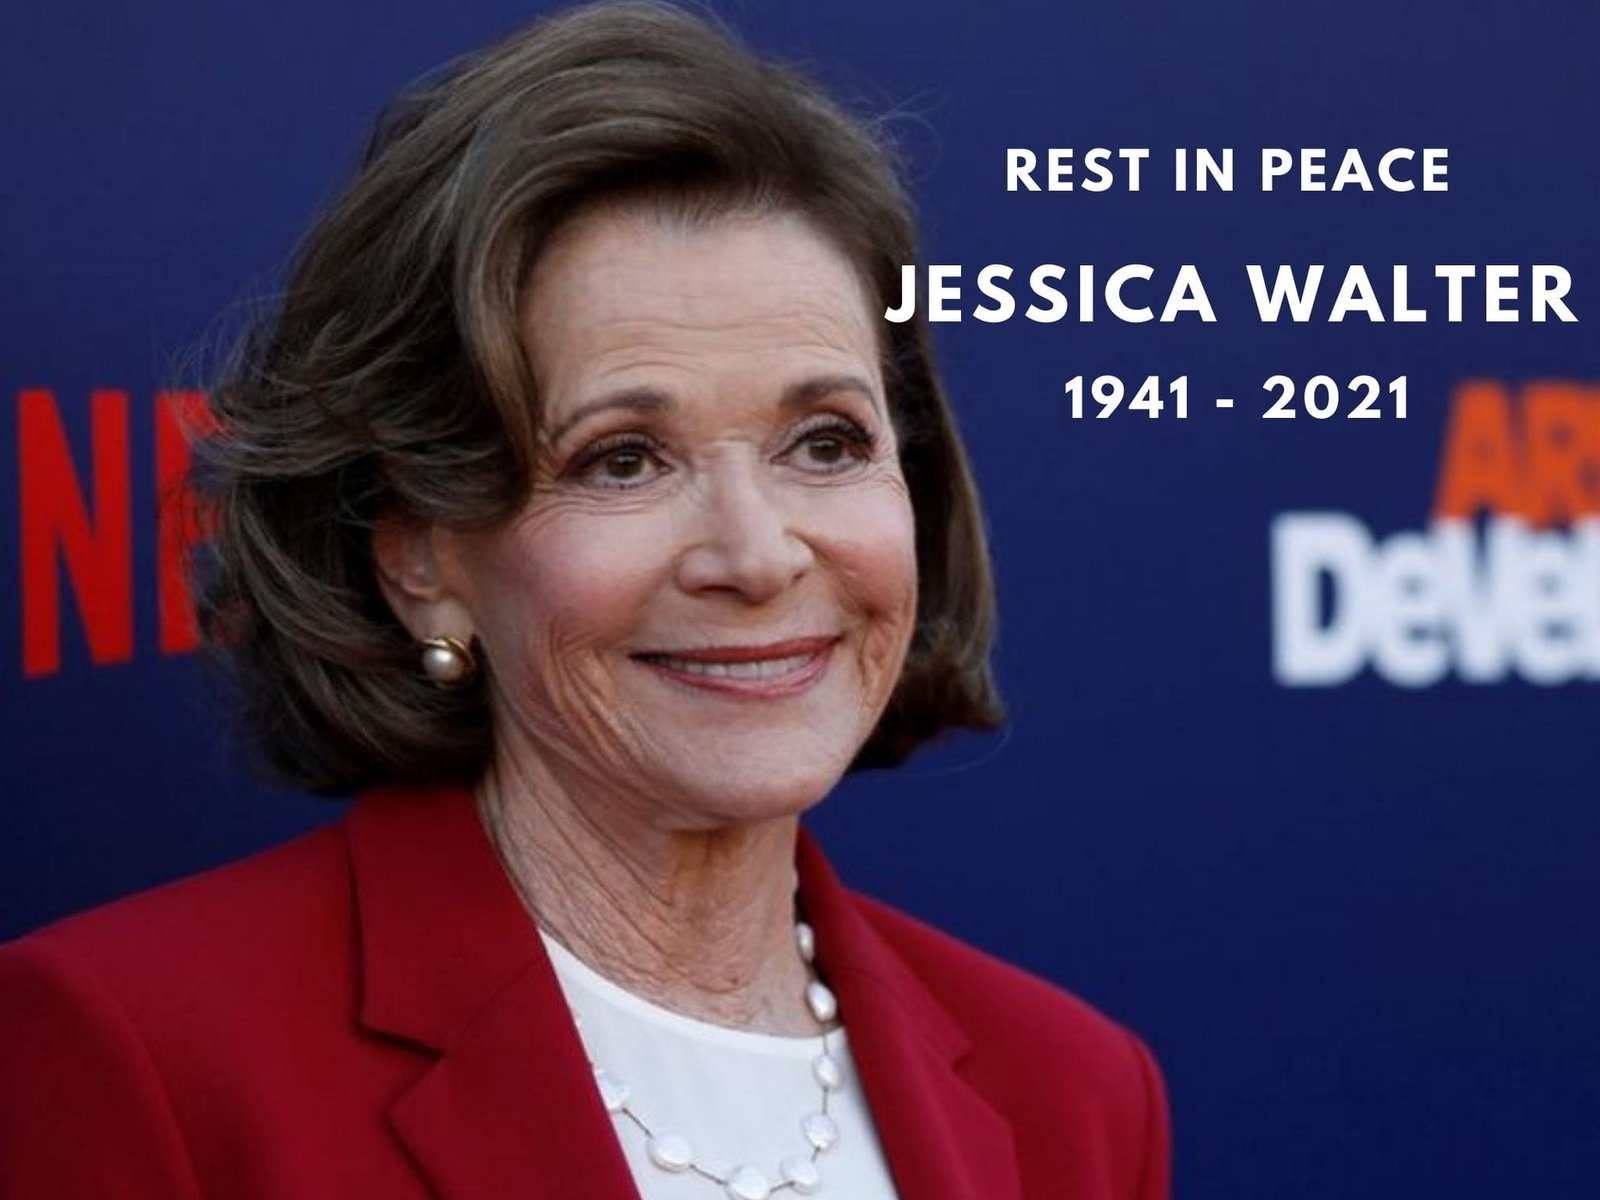 Rest in Peace - Jessica Walter